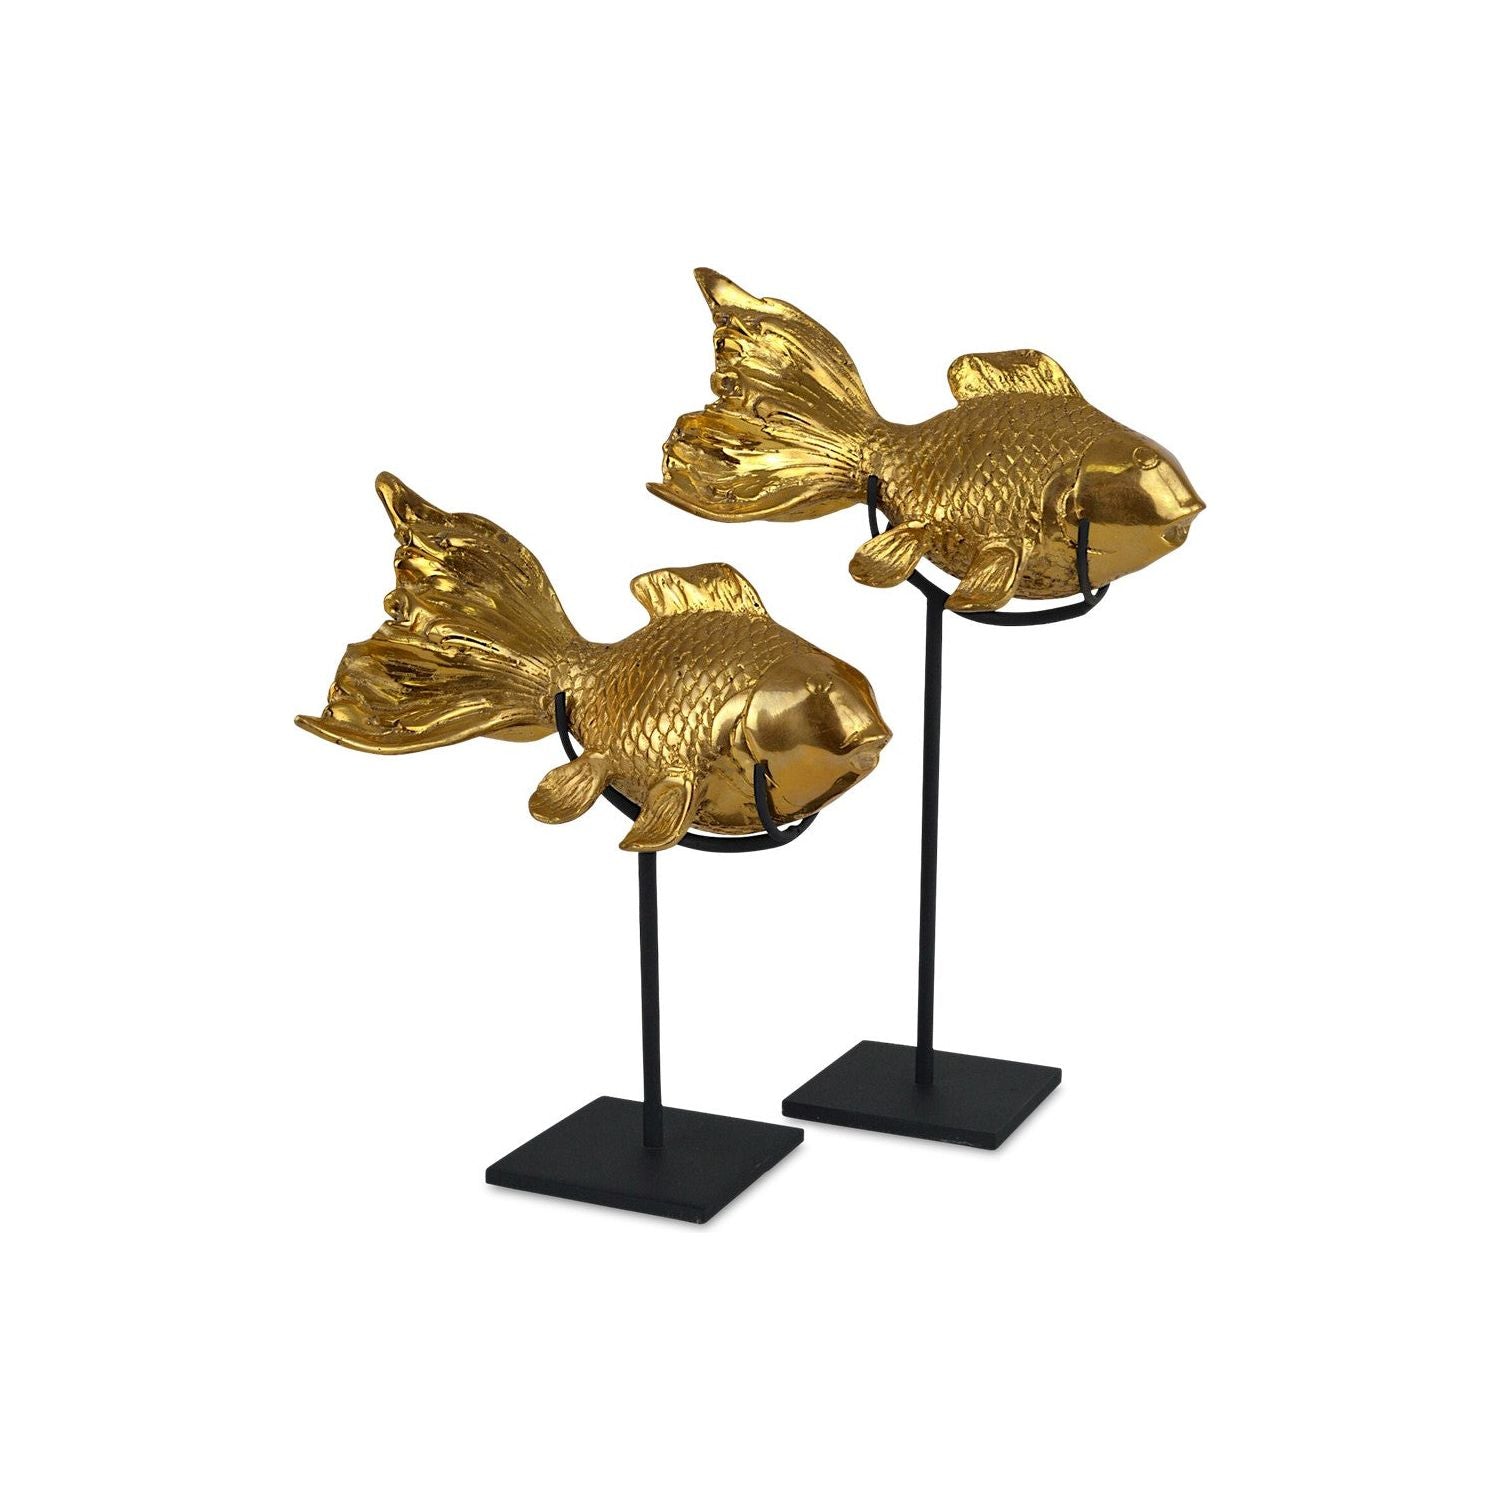 Currey and Company - 1200-0902 - Goldfish Set of 2 - Gold/Black